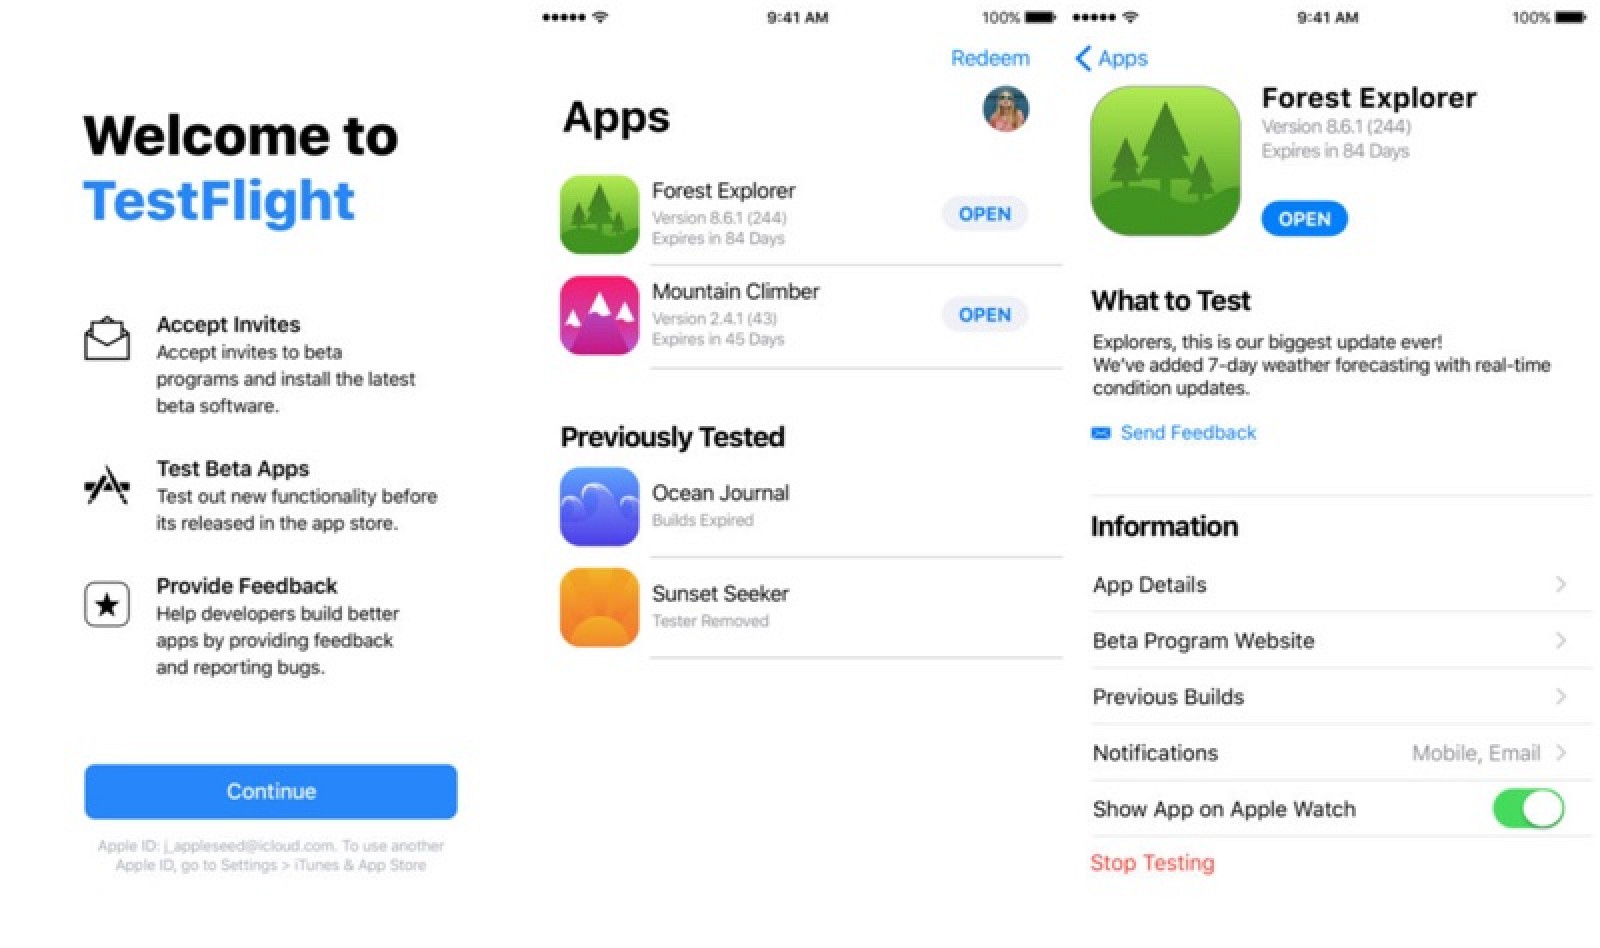 TestFlight App Updated With Overhauled Interface for iOS 11 - MacRumors